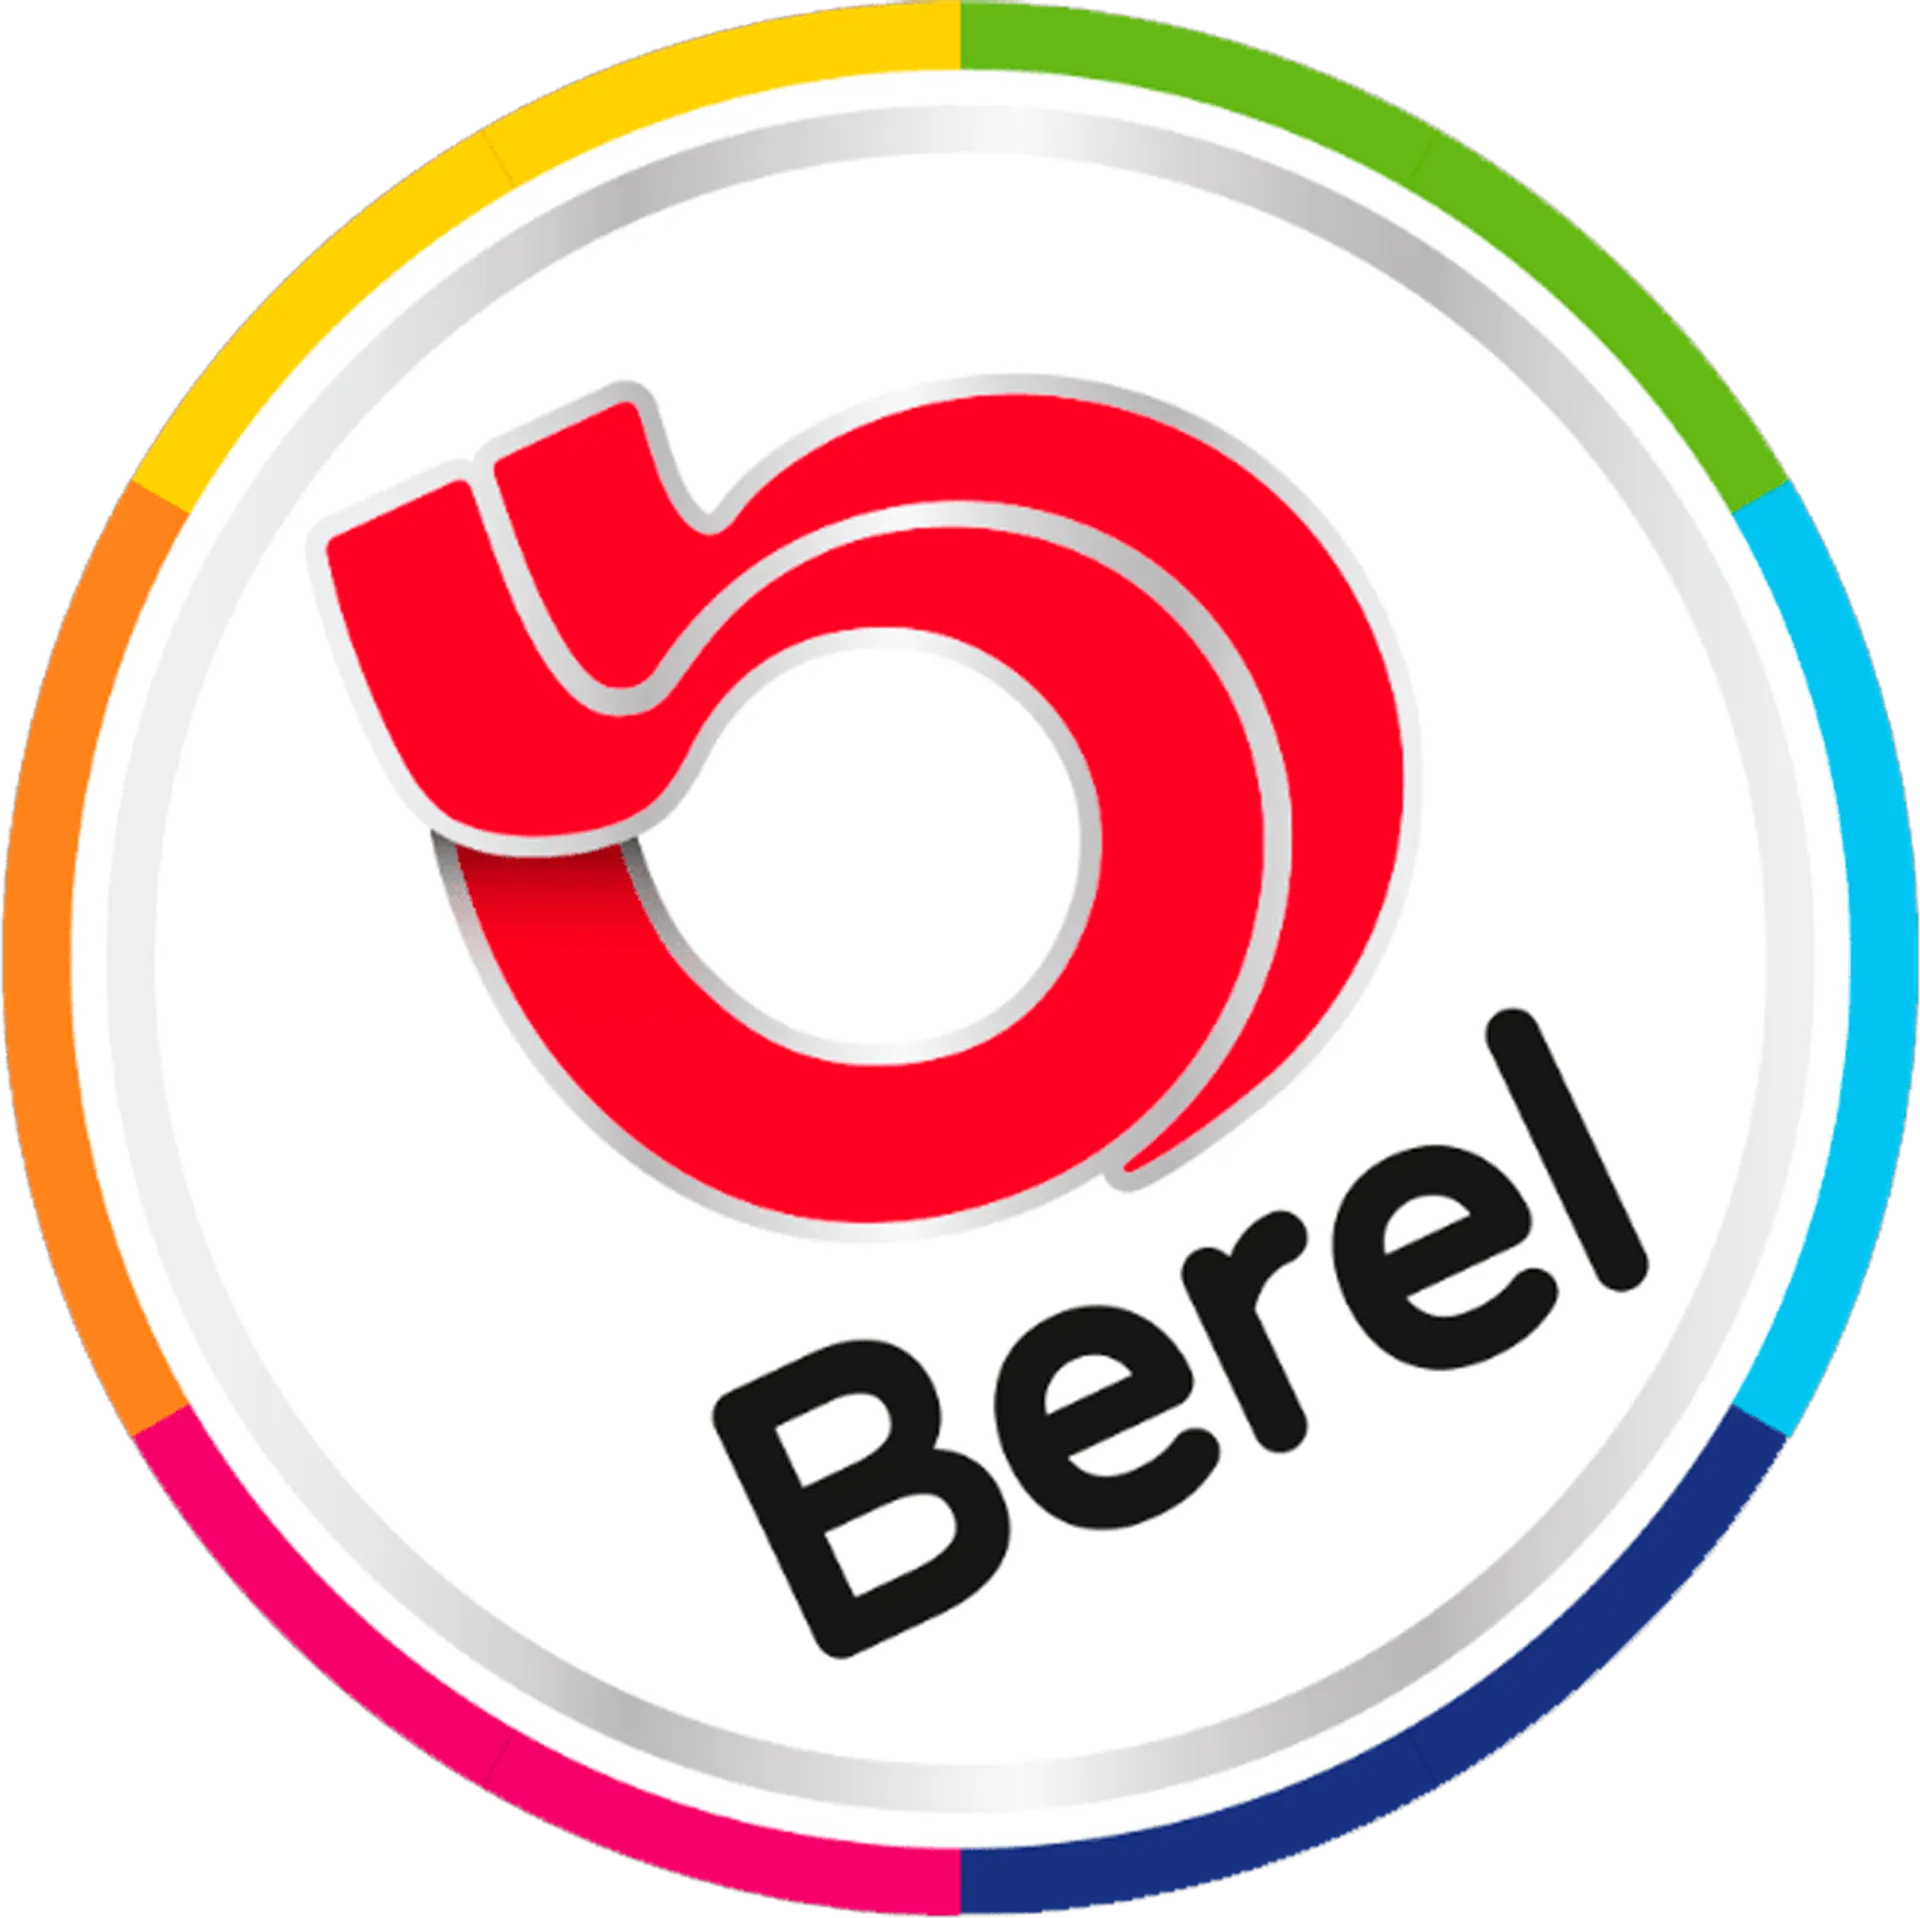 BEREL logo